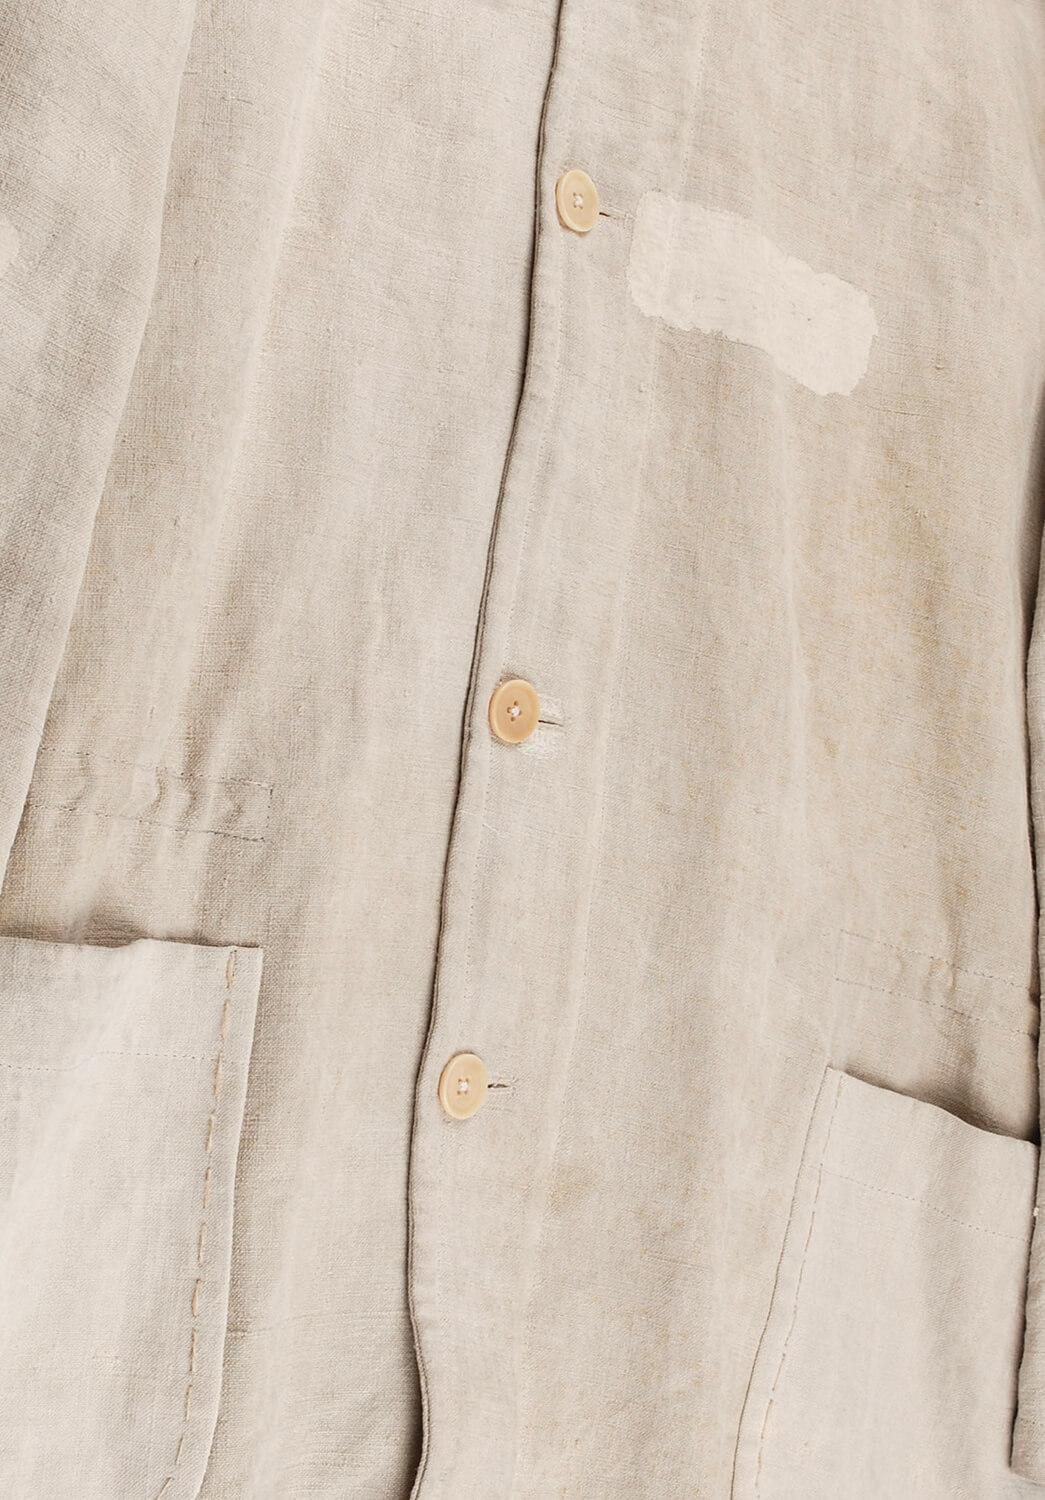 Yohji Yamamoto Pour Homme Schwerer Maler Leinenpelz Parka Mantel mit Reißverschluss Gr. 3(XL) (Beige)